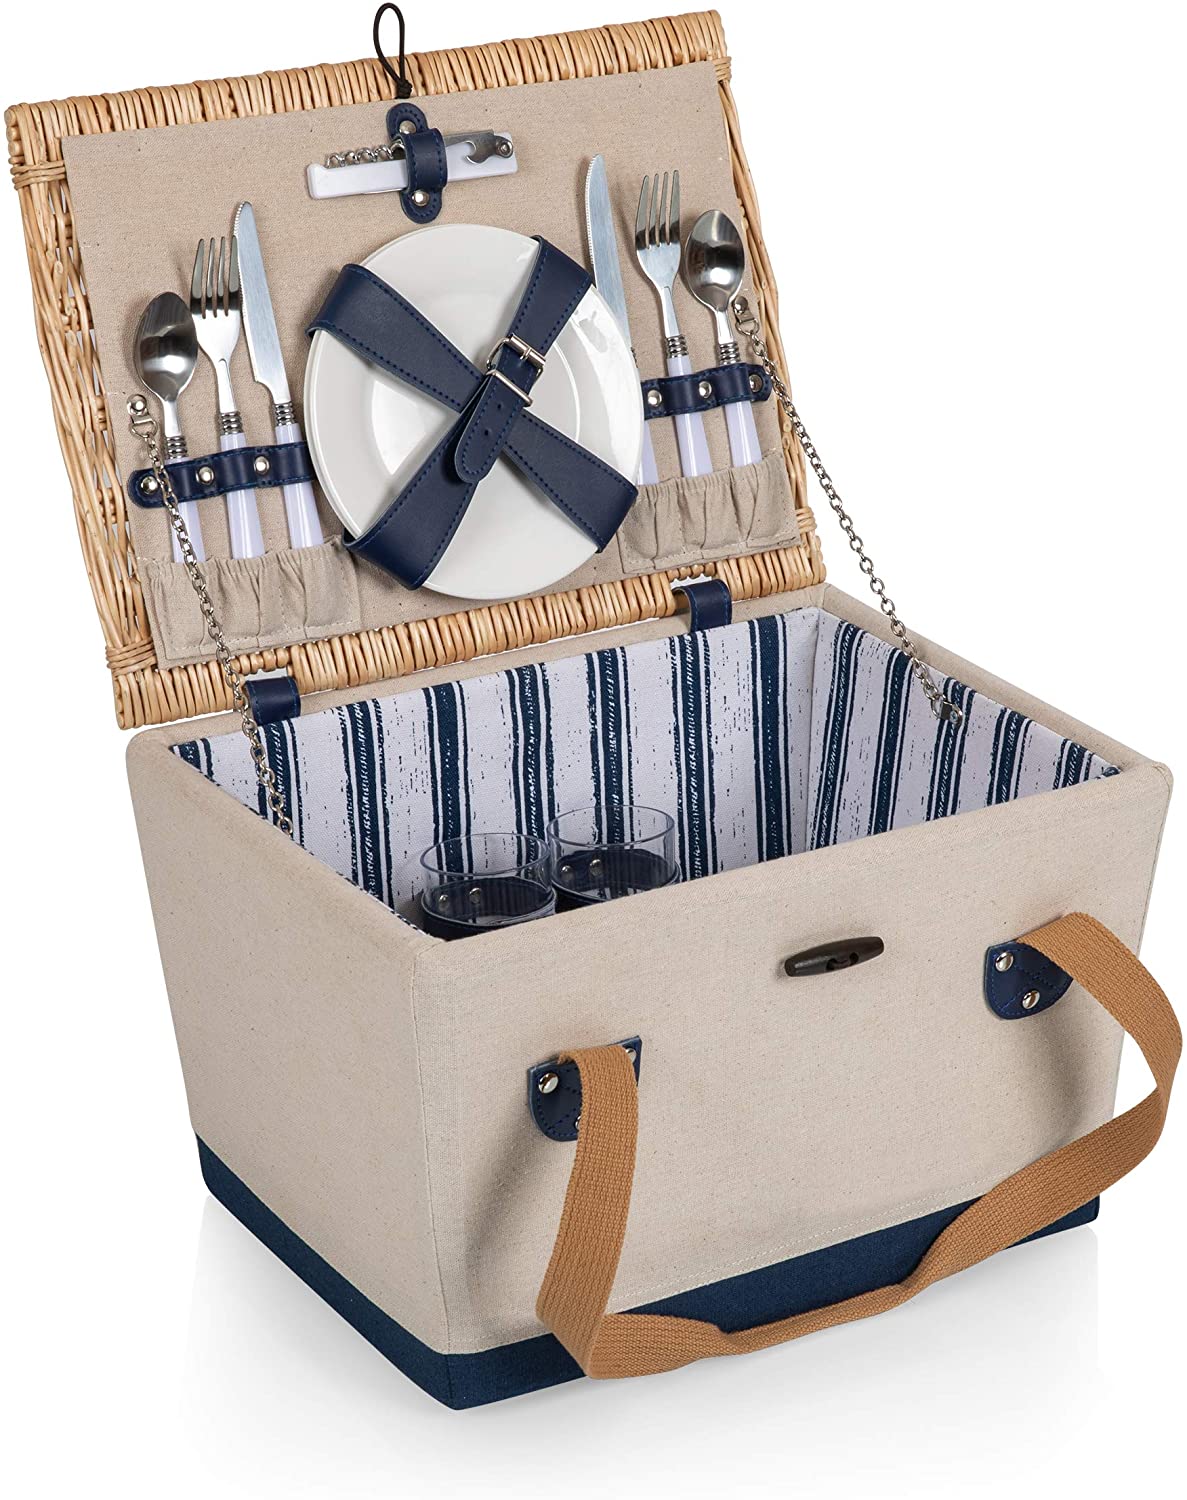 25-anniversary-gifts-picnic-basket